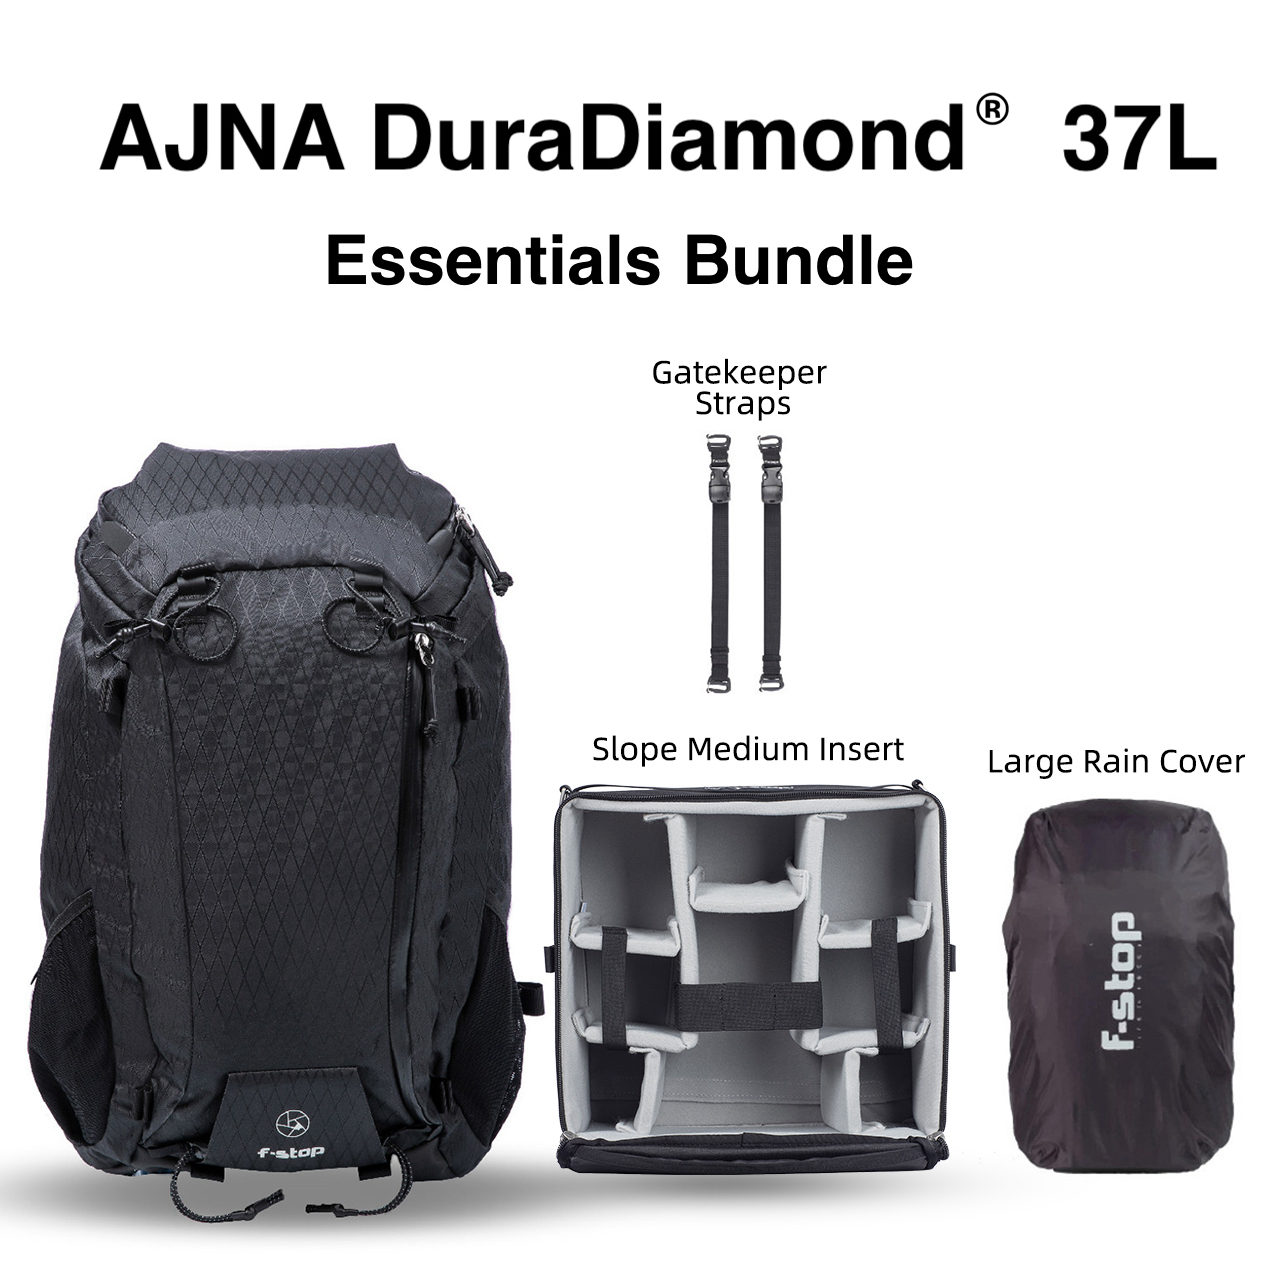 AJNA DuraDiamond™ Adventure and Travel Camera Pack